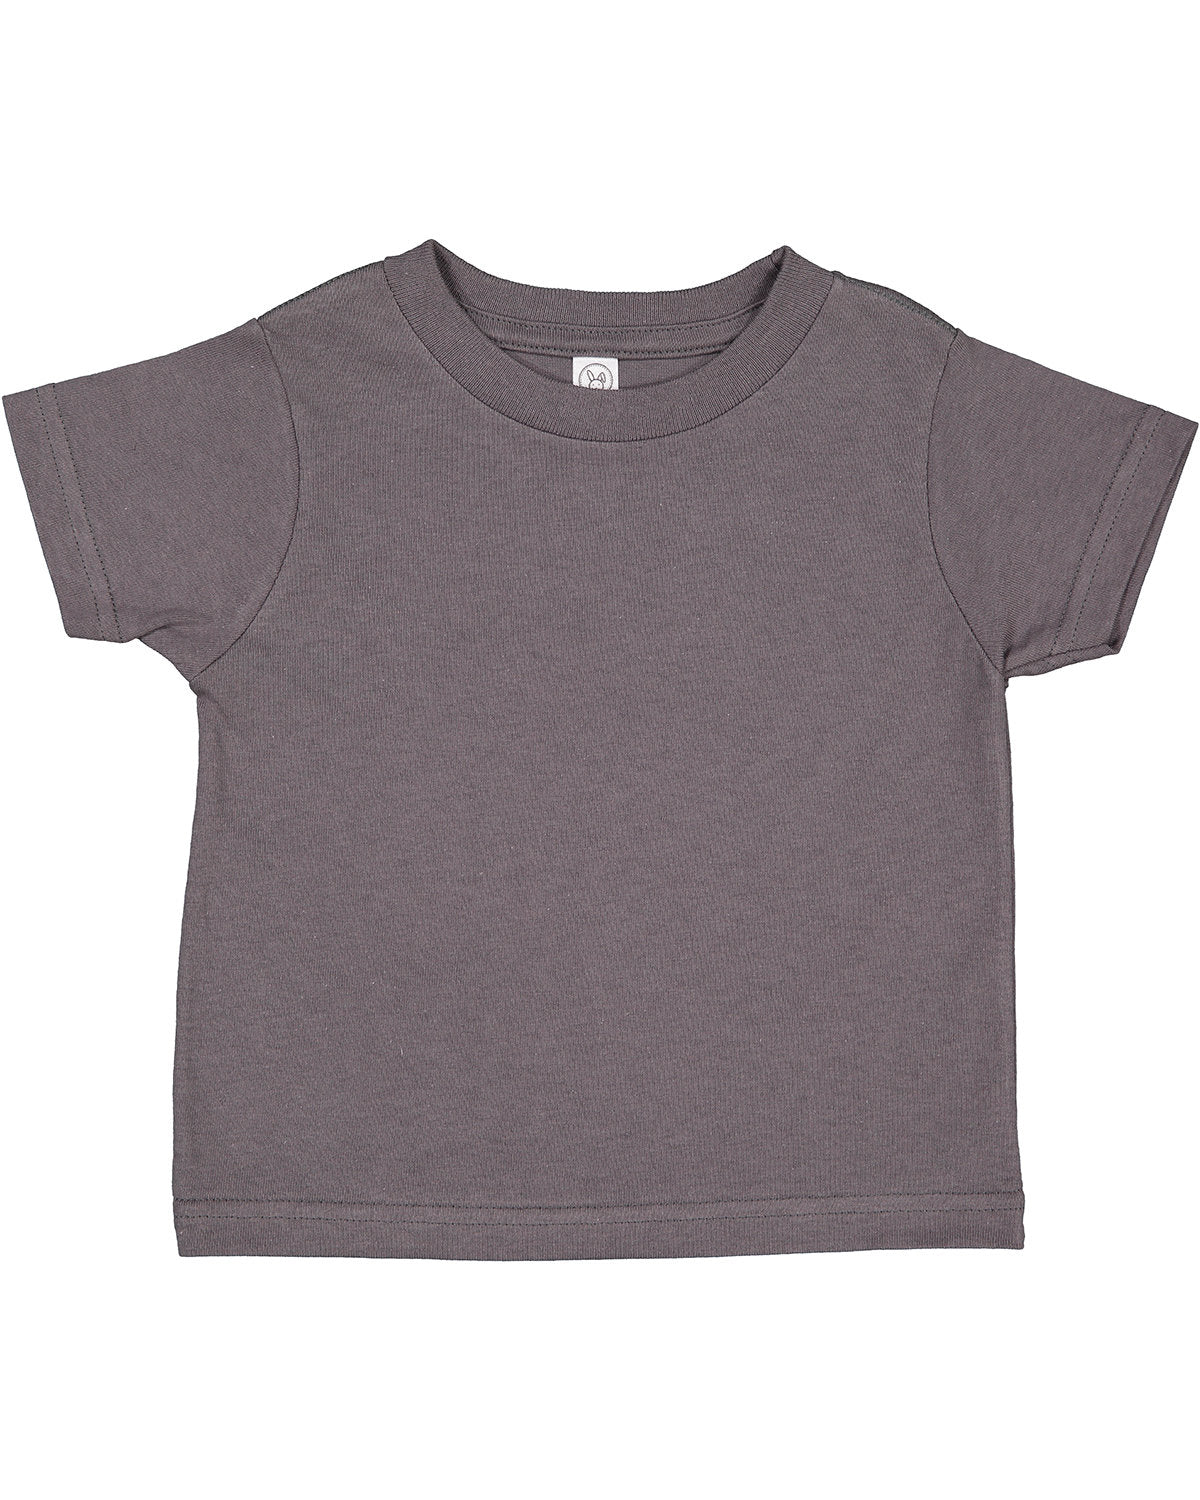 Rabbit Skins Toddler Cotton Jersey T-Shirt 2T / Charcoal